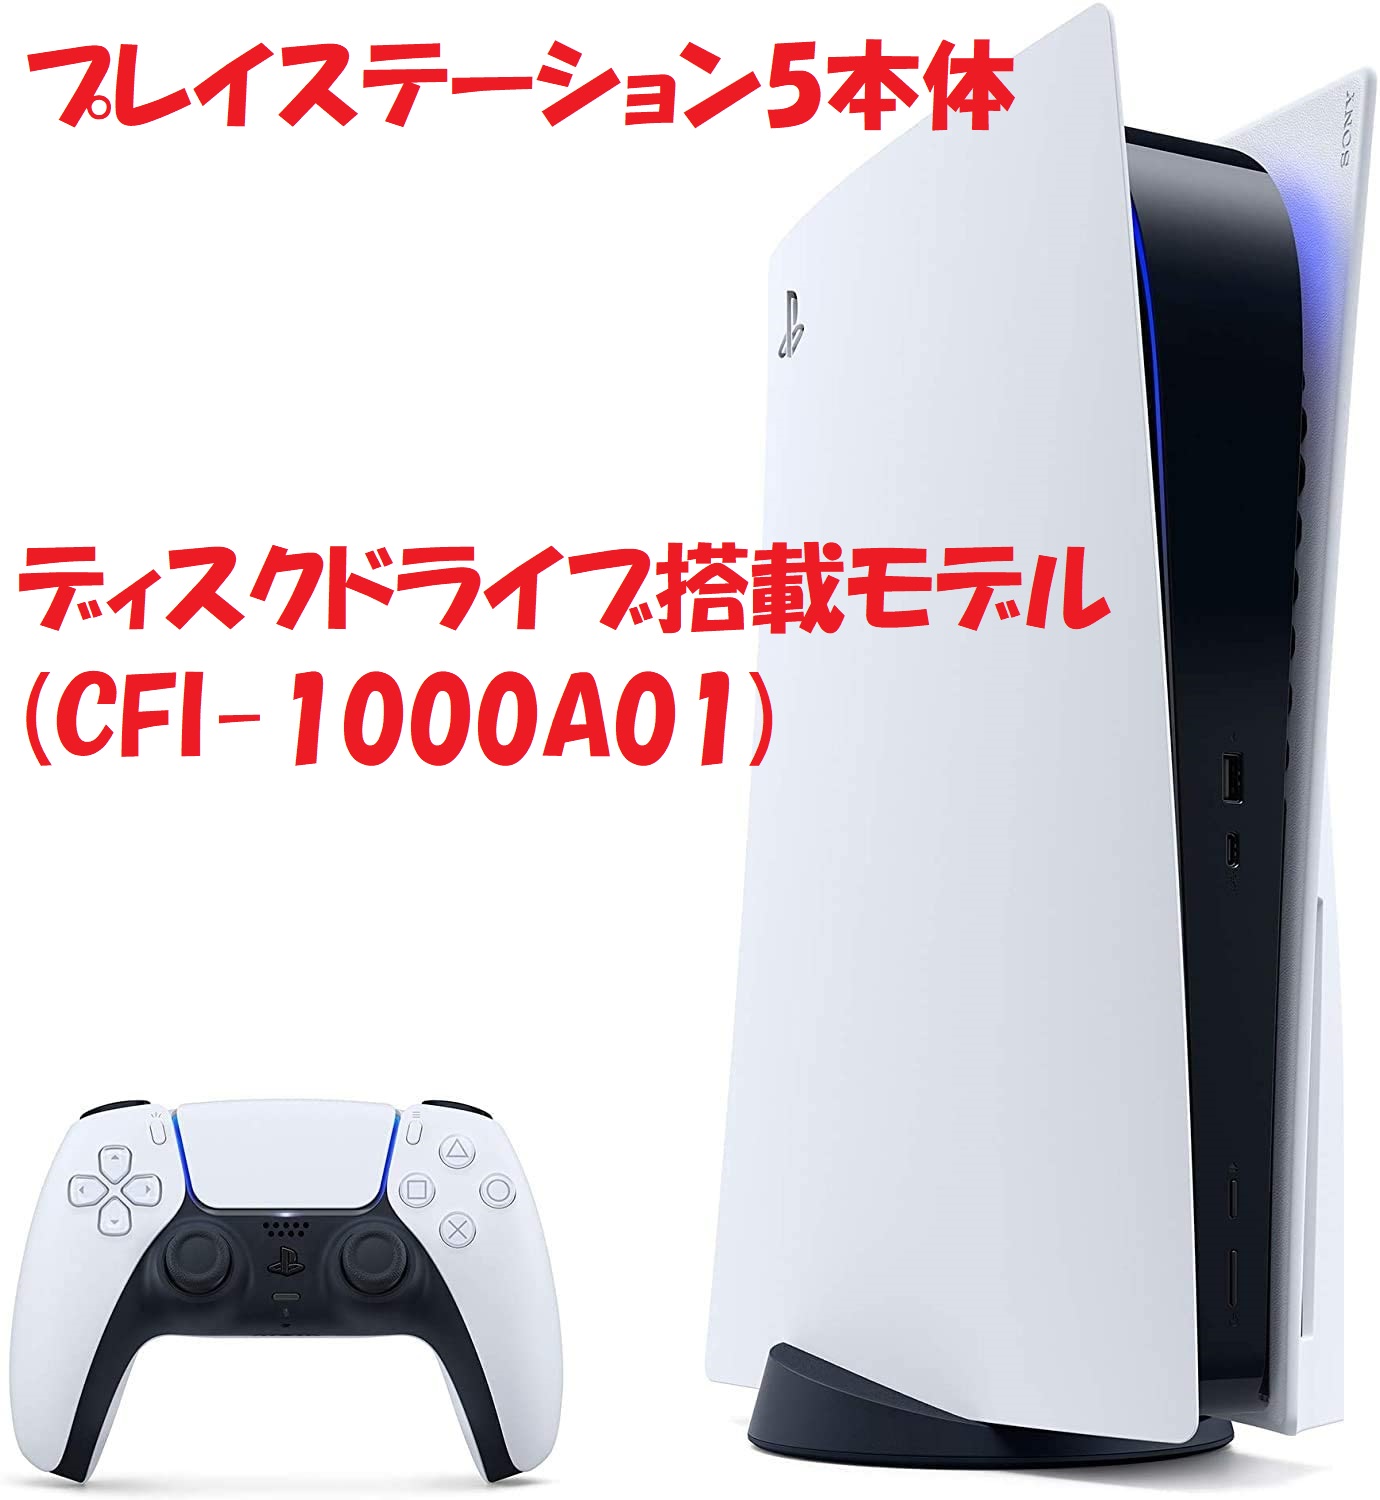 PlayStation 5本体 　ﾃﾞｨｽｸﾄﾞﾗｲﾌﾞ搭載ﾓﾃﾞﾙ(CFI-1000A01) 高価買取中